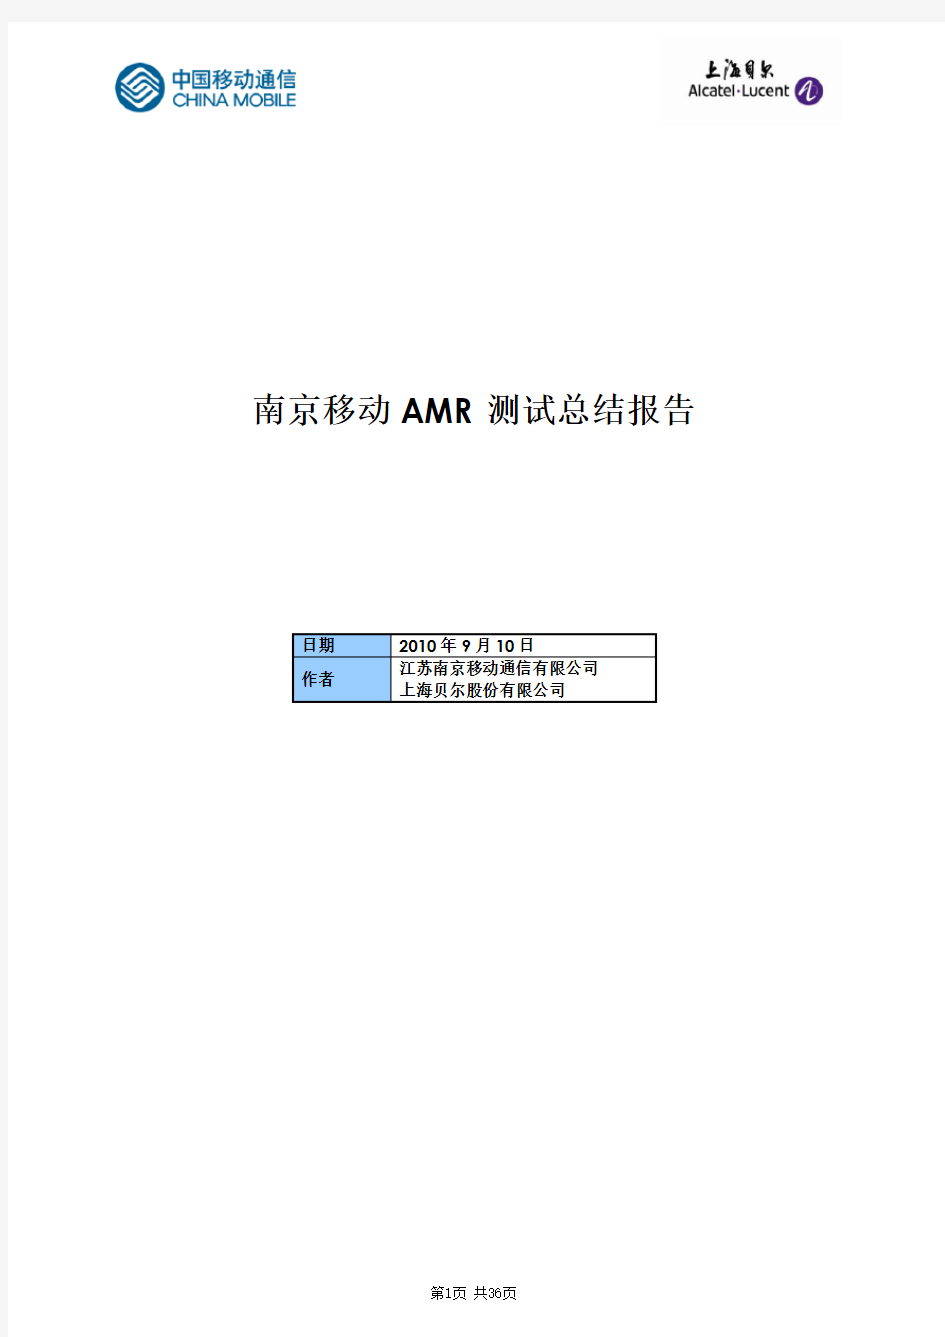 W1038-南京移动AMR测试总结报告V1.1